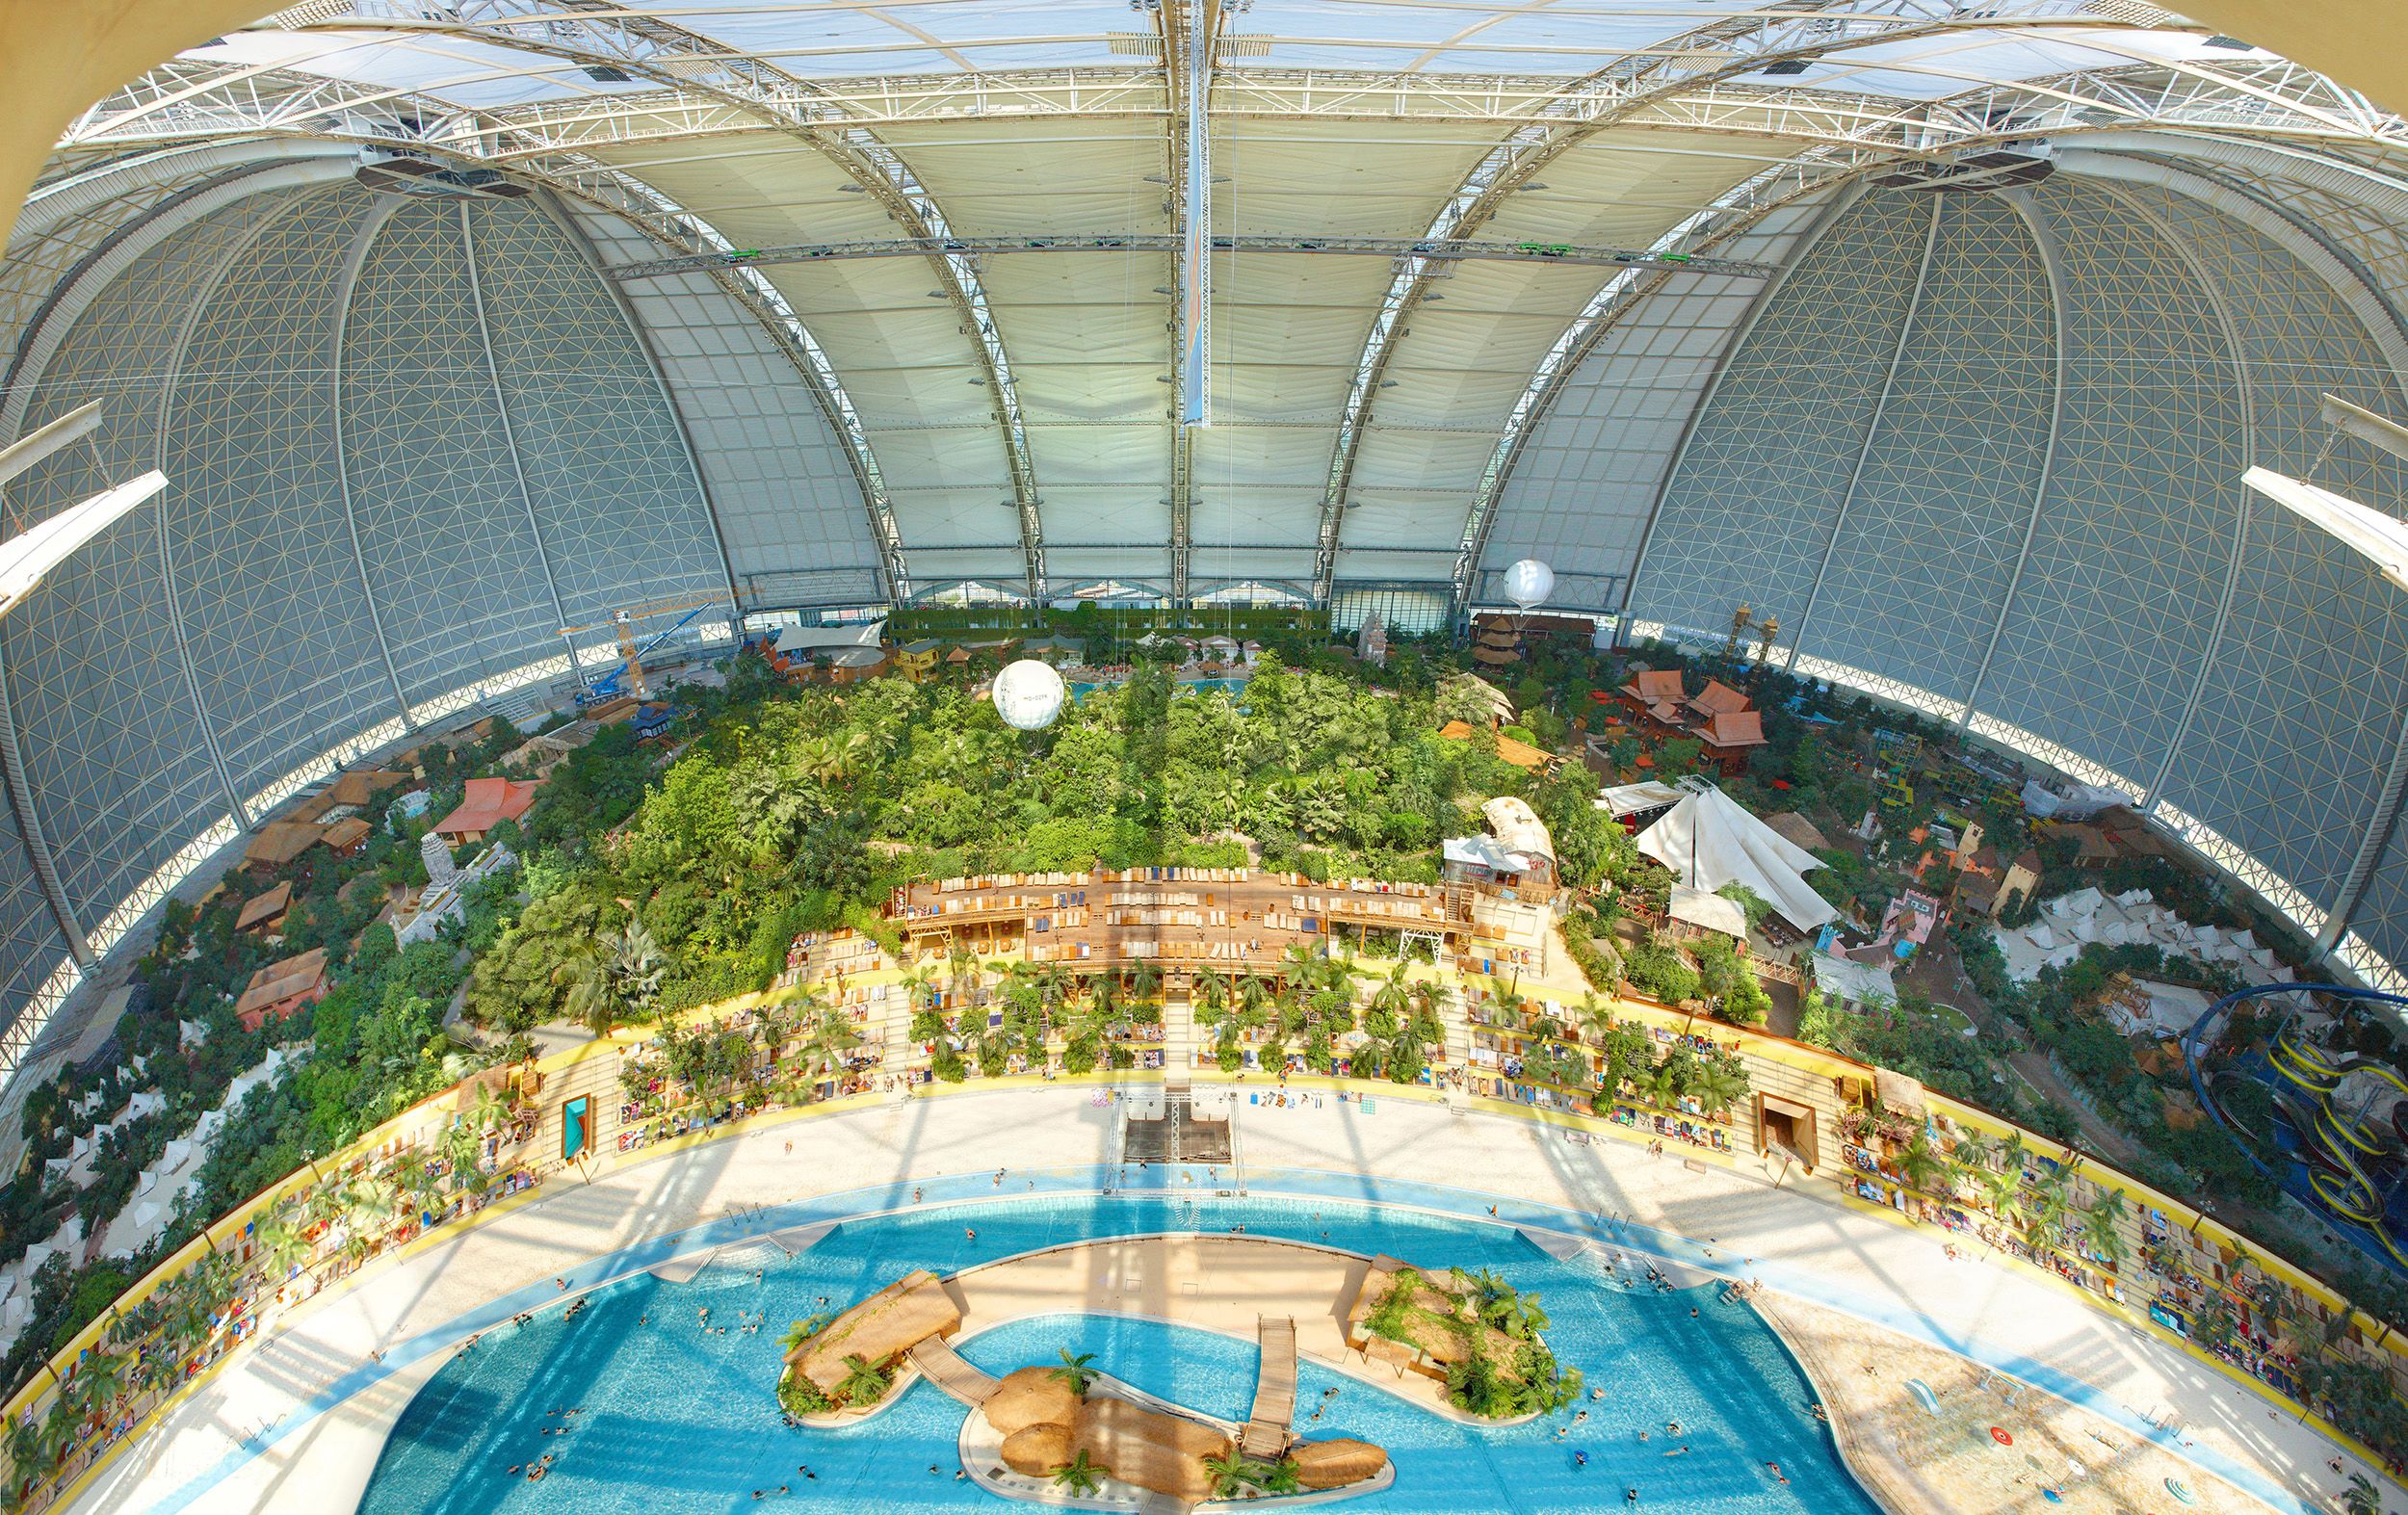 the biggest indoor water park in the world